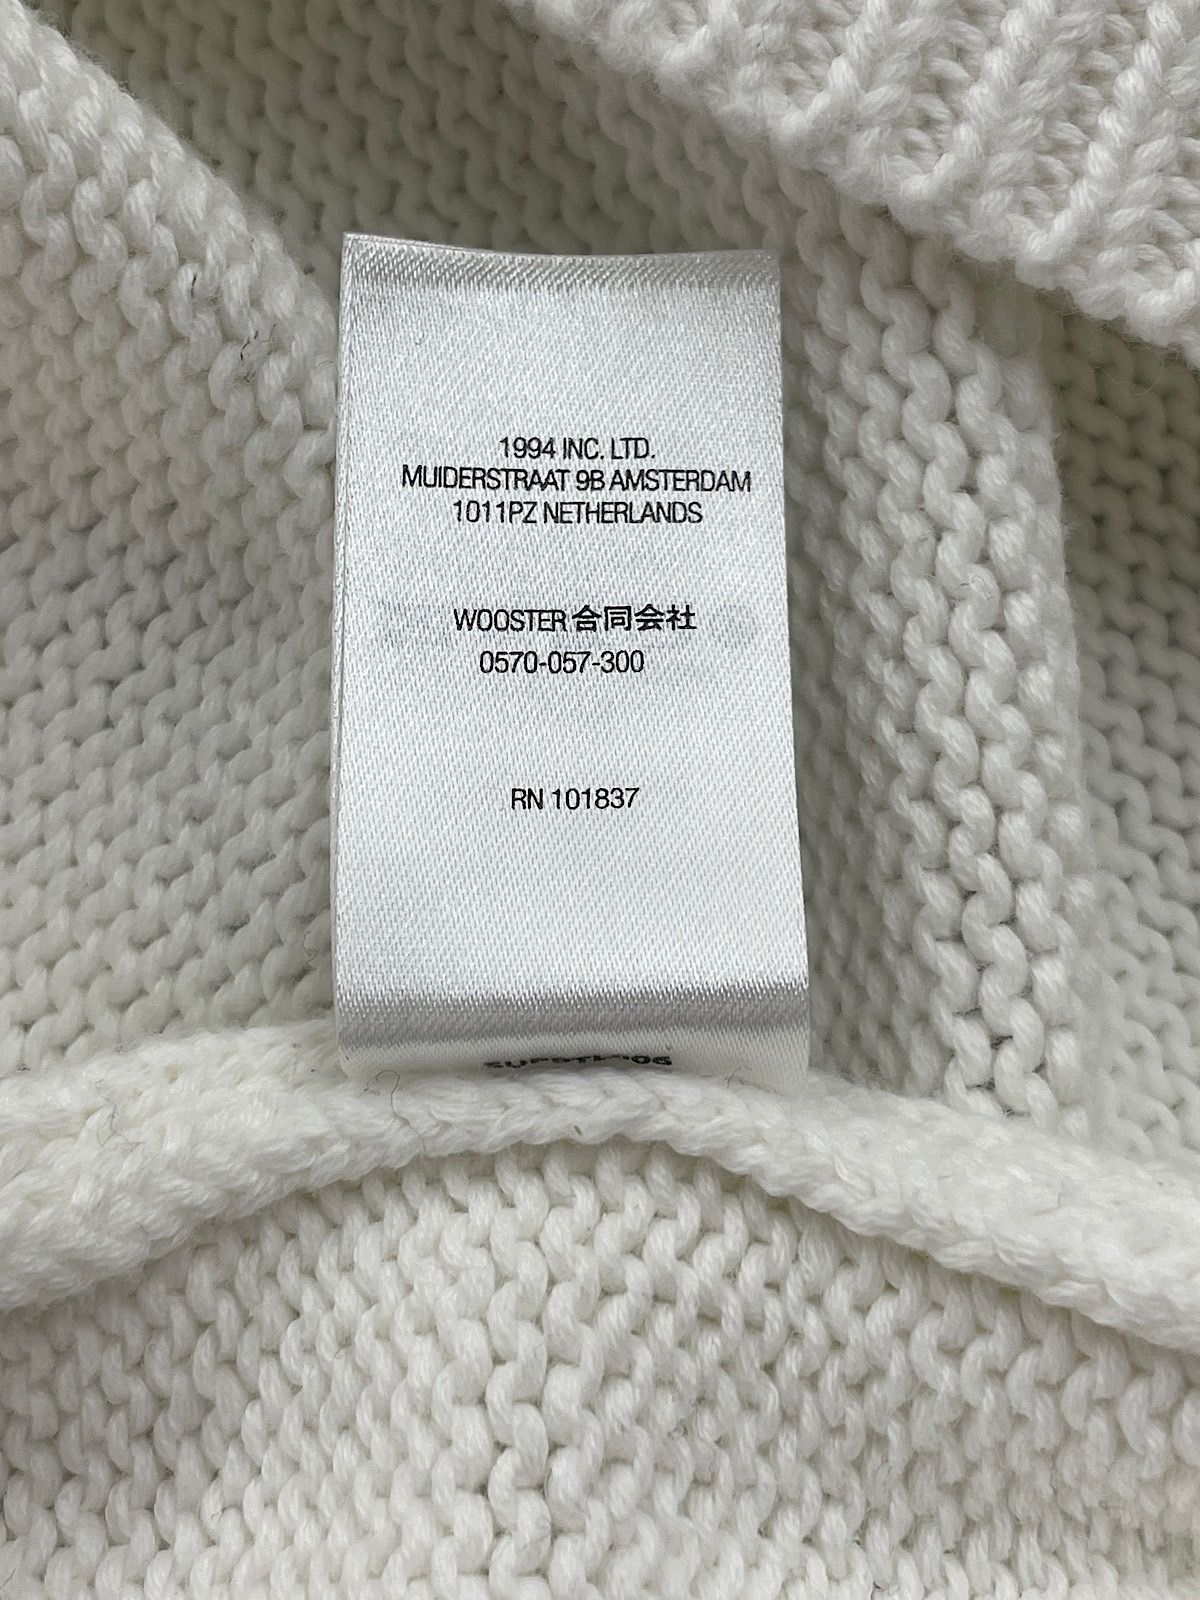 『USED』   Supreme シュプリーム Chenille Logo Sweater シェニール ロゴ セーター コットン/アクリル  /ナイロン ホワイト メンズ